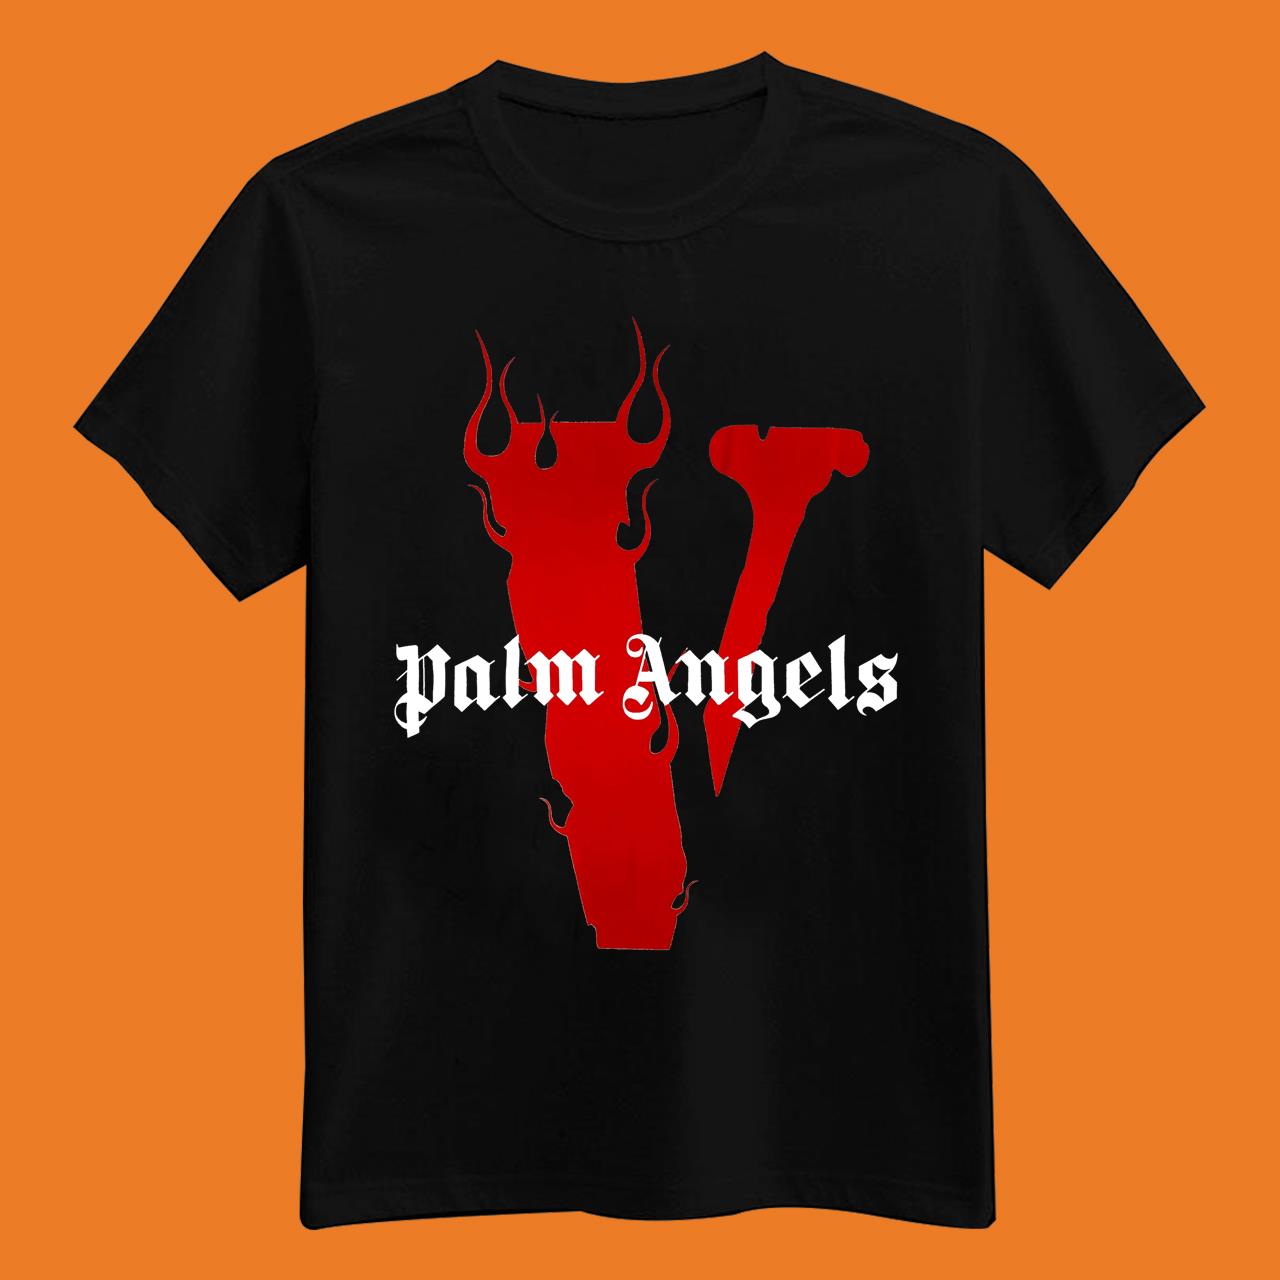 Vlone x Palm Angels Flame Staple Tee Shirt